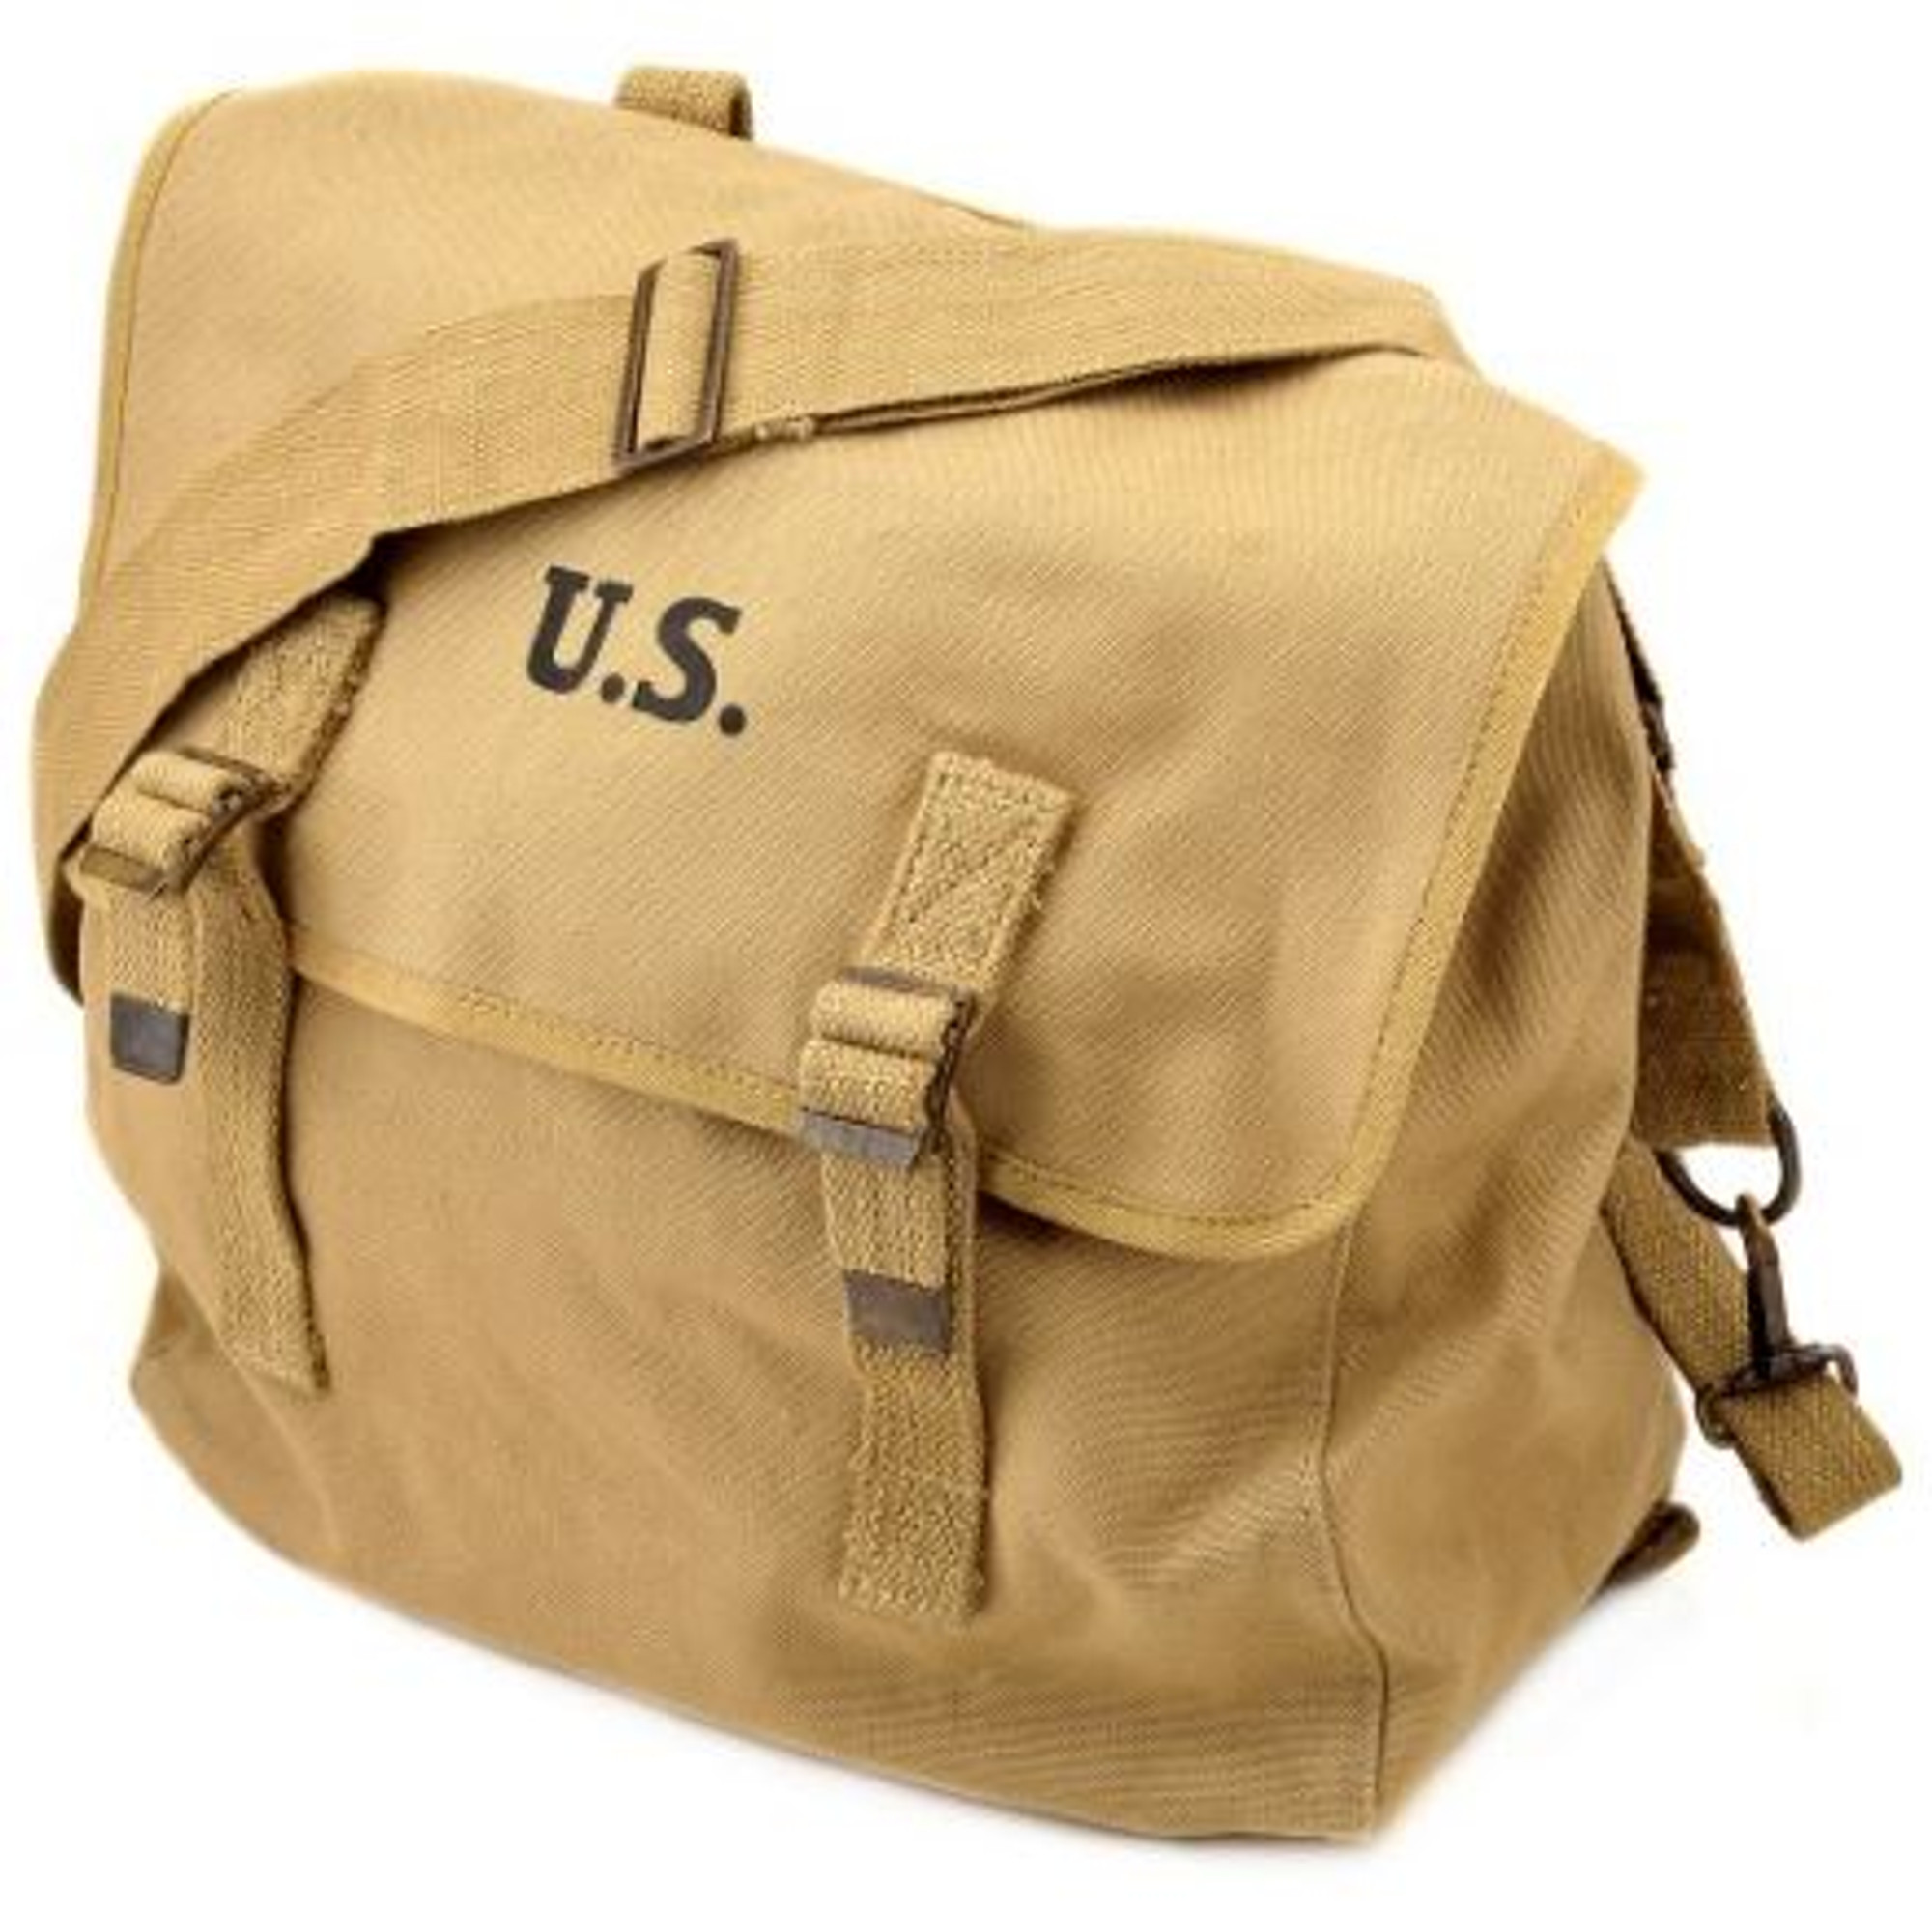 U.S. WW2 M1936 Musette Bag with Shoulder strap Khaki marked JT&L 1942